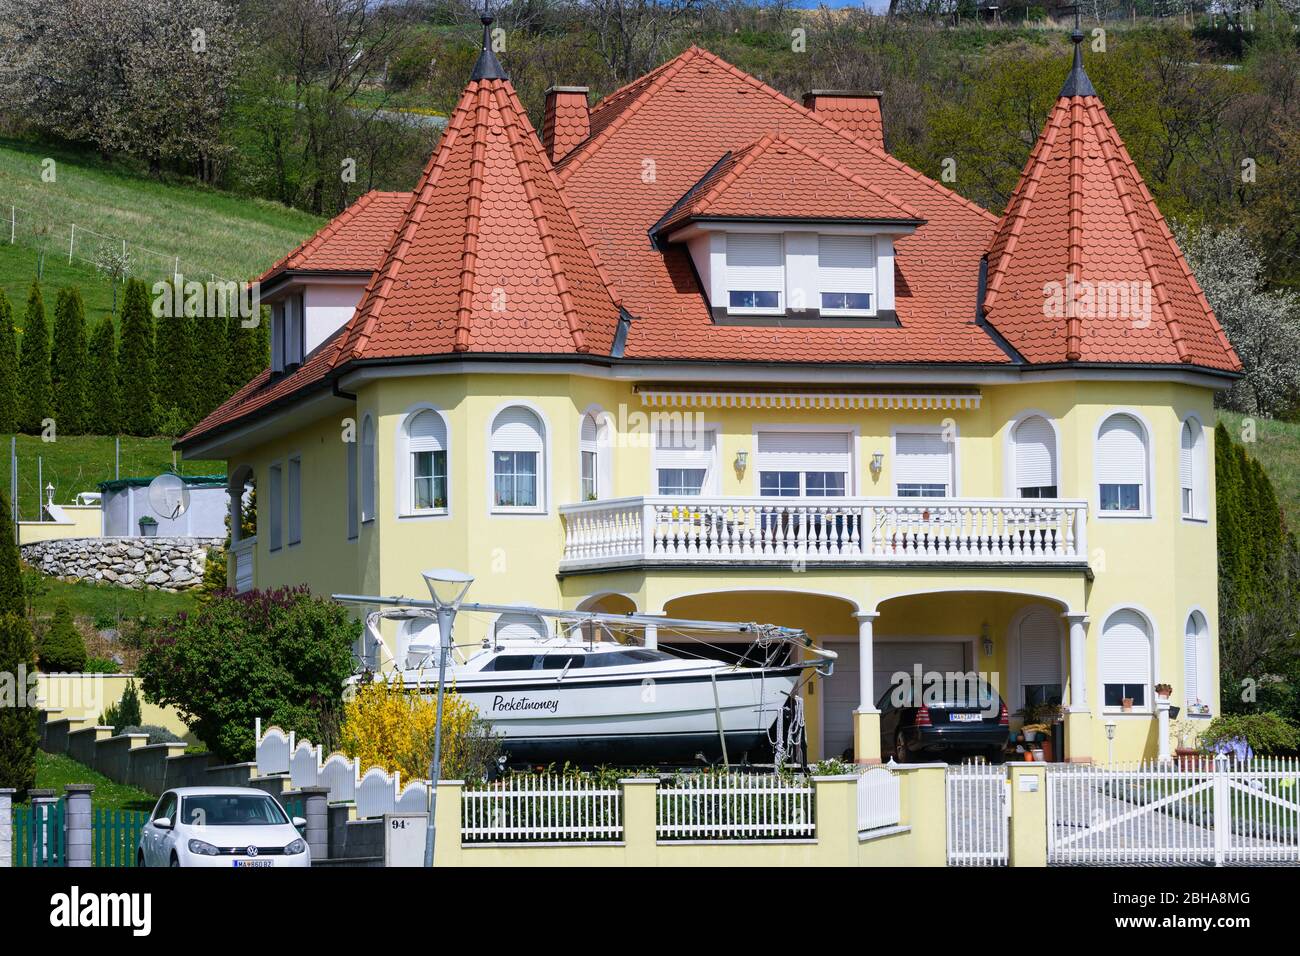 Forchtenstein: villa, yacht, auto Mercedes, Pocketmoney, ricchezza, cliché in Neusiedler See (lago di Neusiedl), Burgenland, Austria Foto Stock